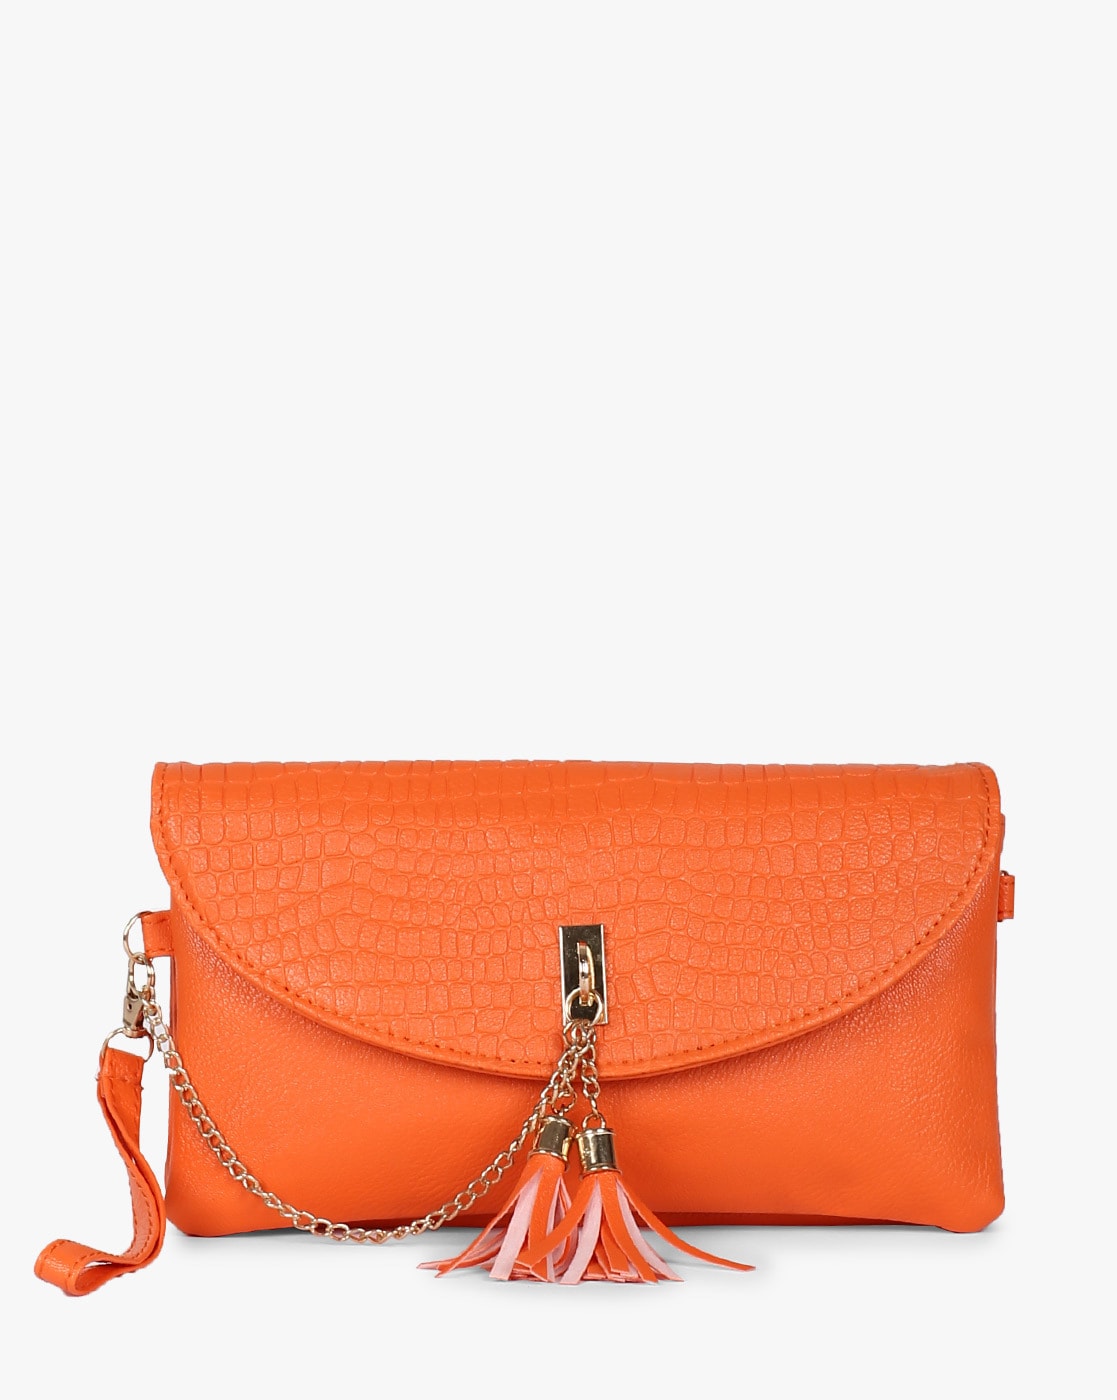 Buy Abil Orange Pu For Women Handbag Online at Best Prices in India -  JioMart.